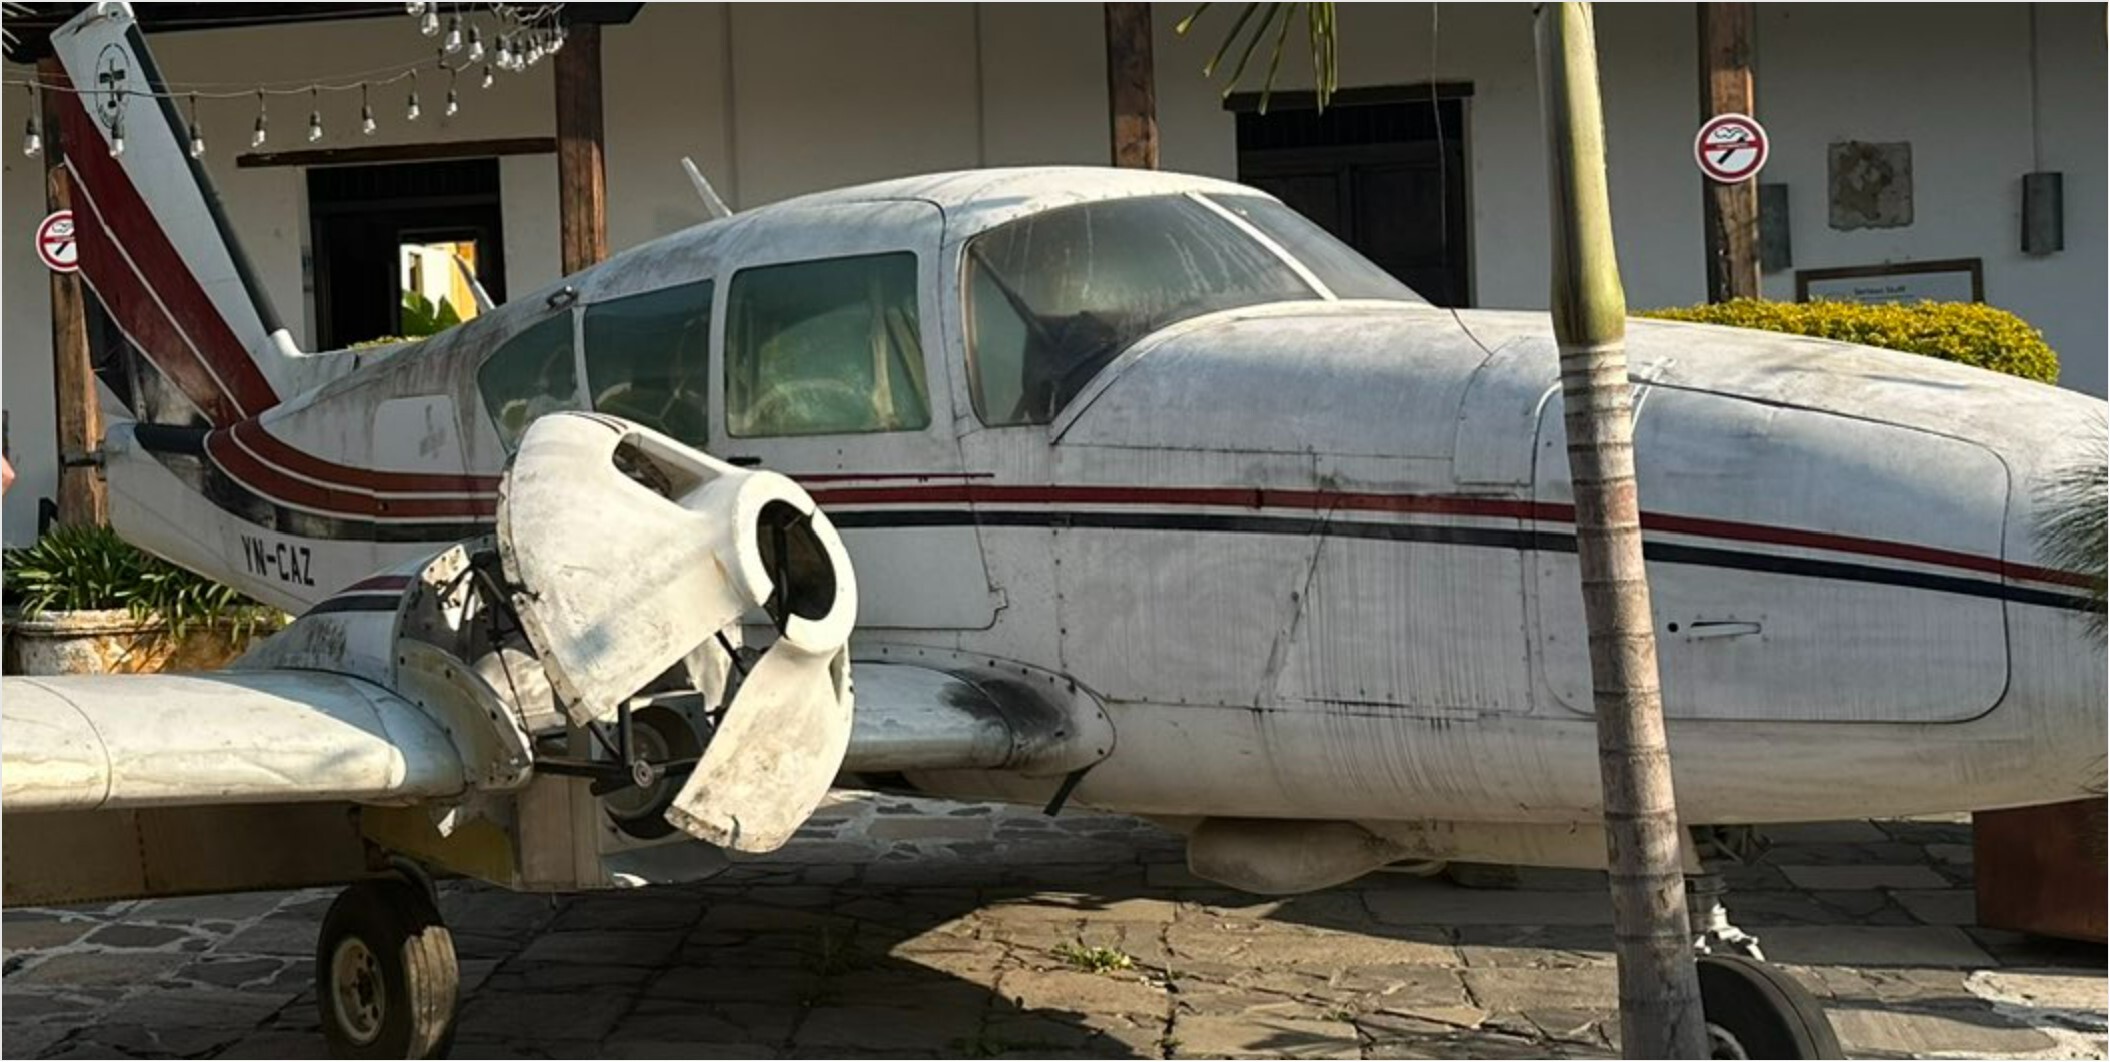 Broken down plane in a coffee shop courtyard